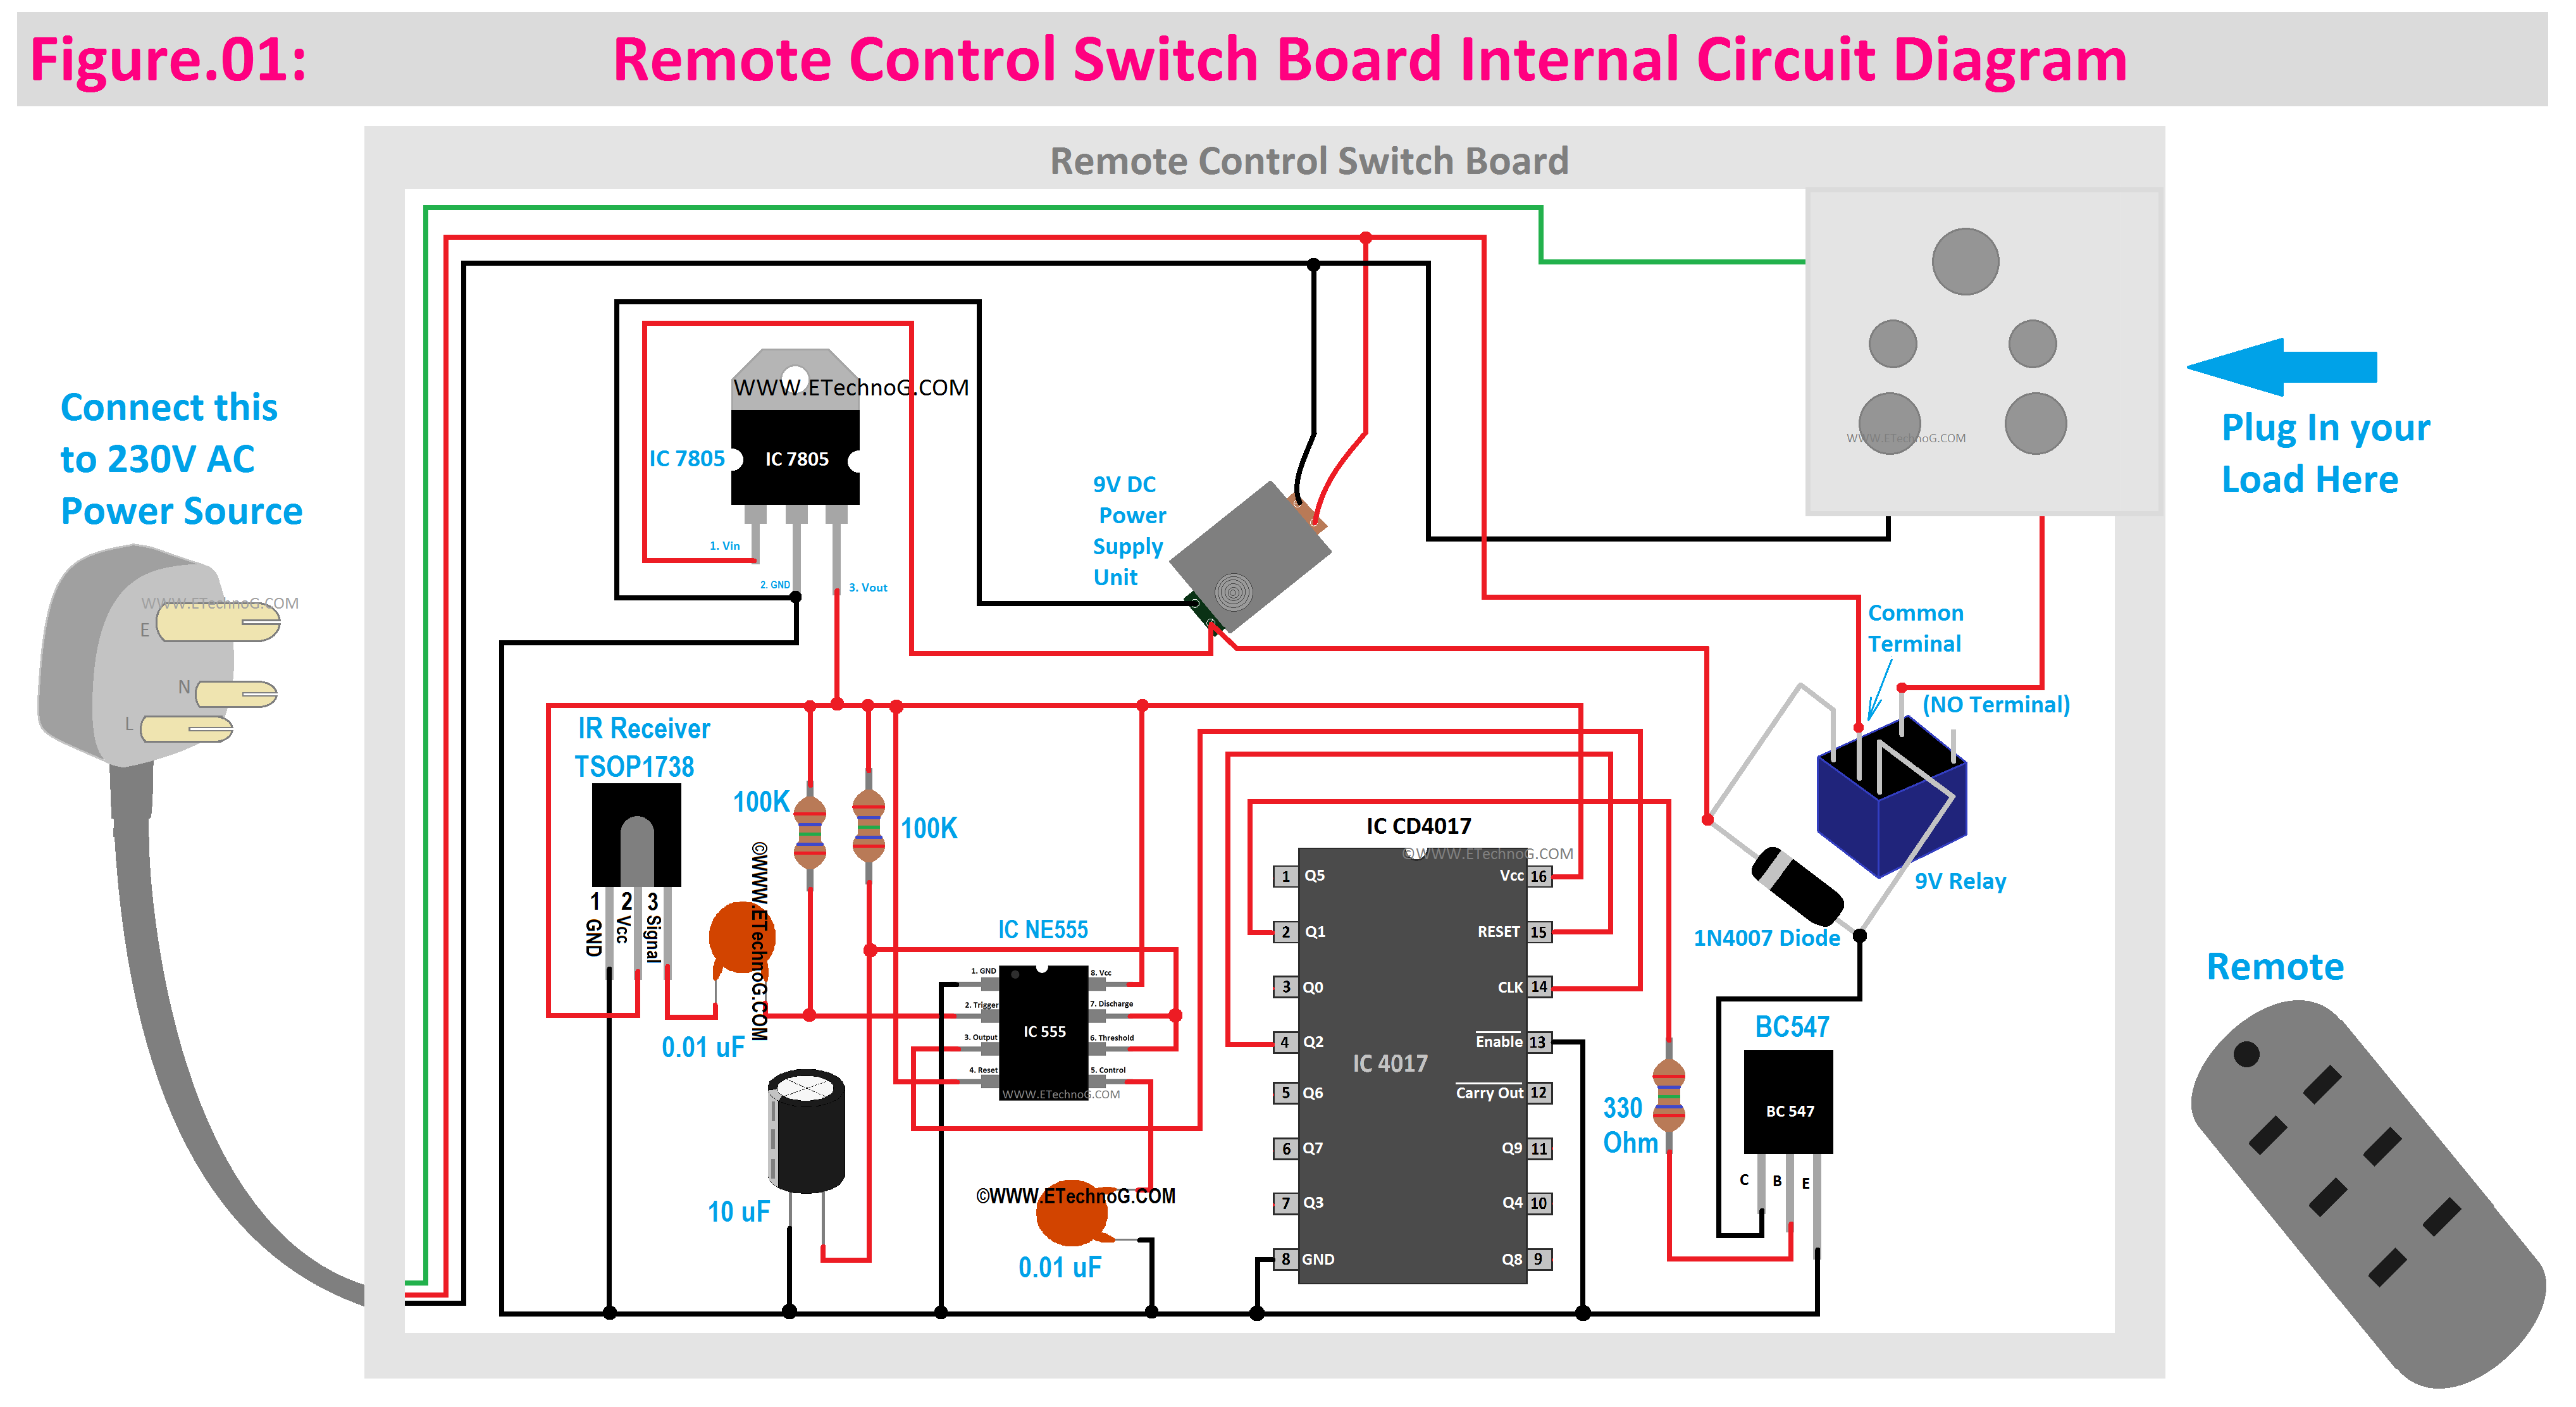 Remote Control Switch Board Internal Circuit Diagram